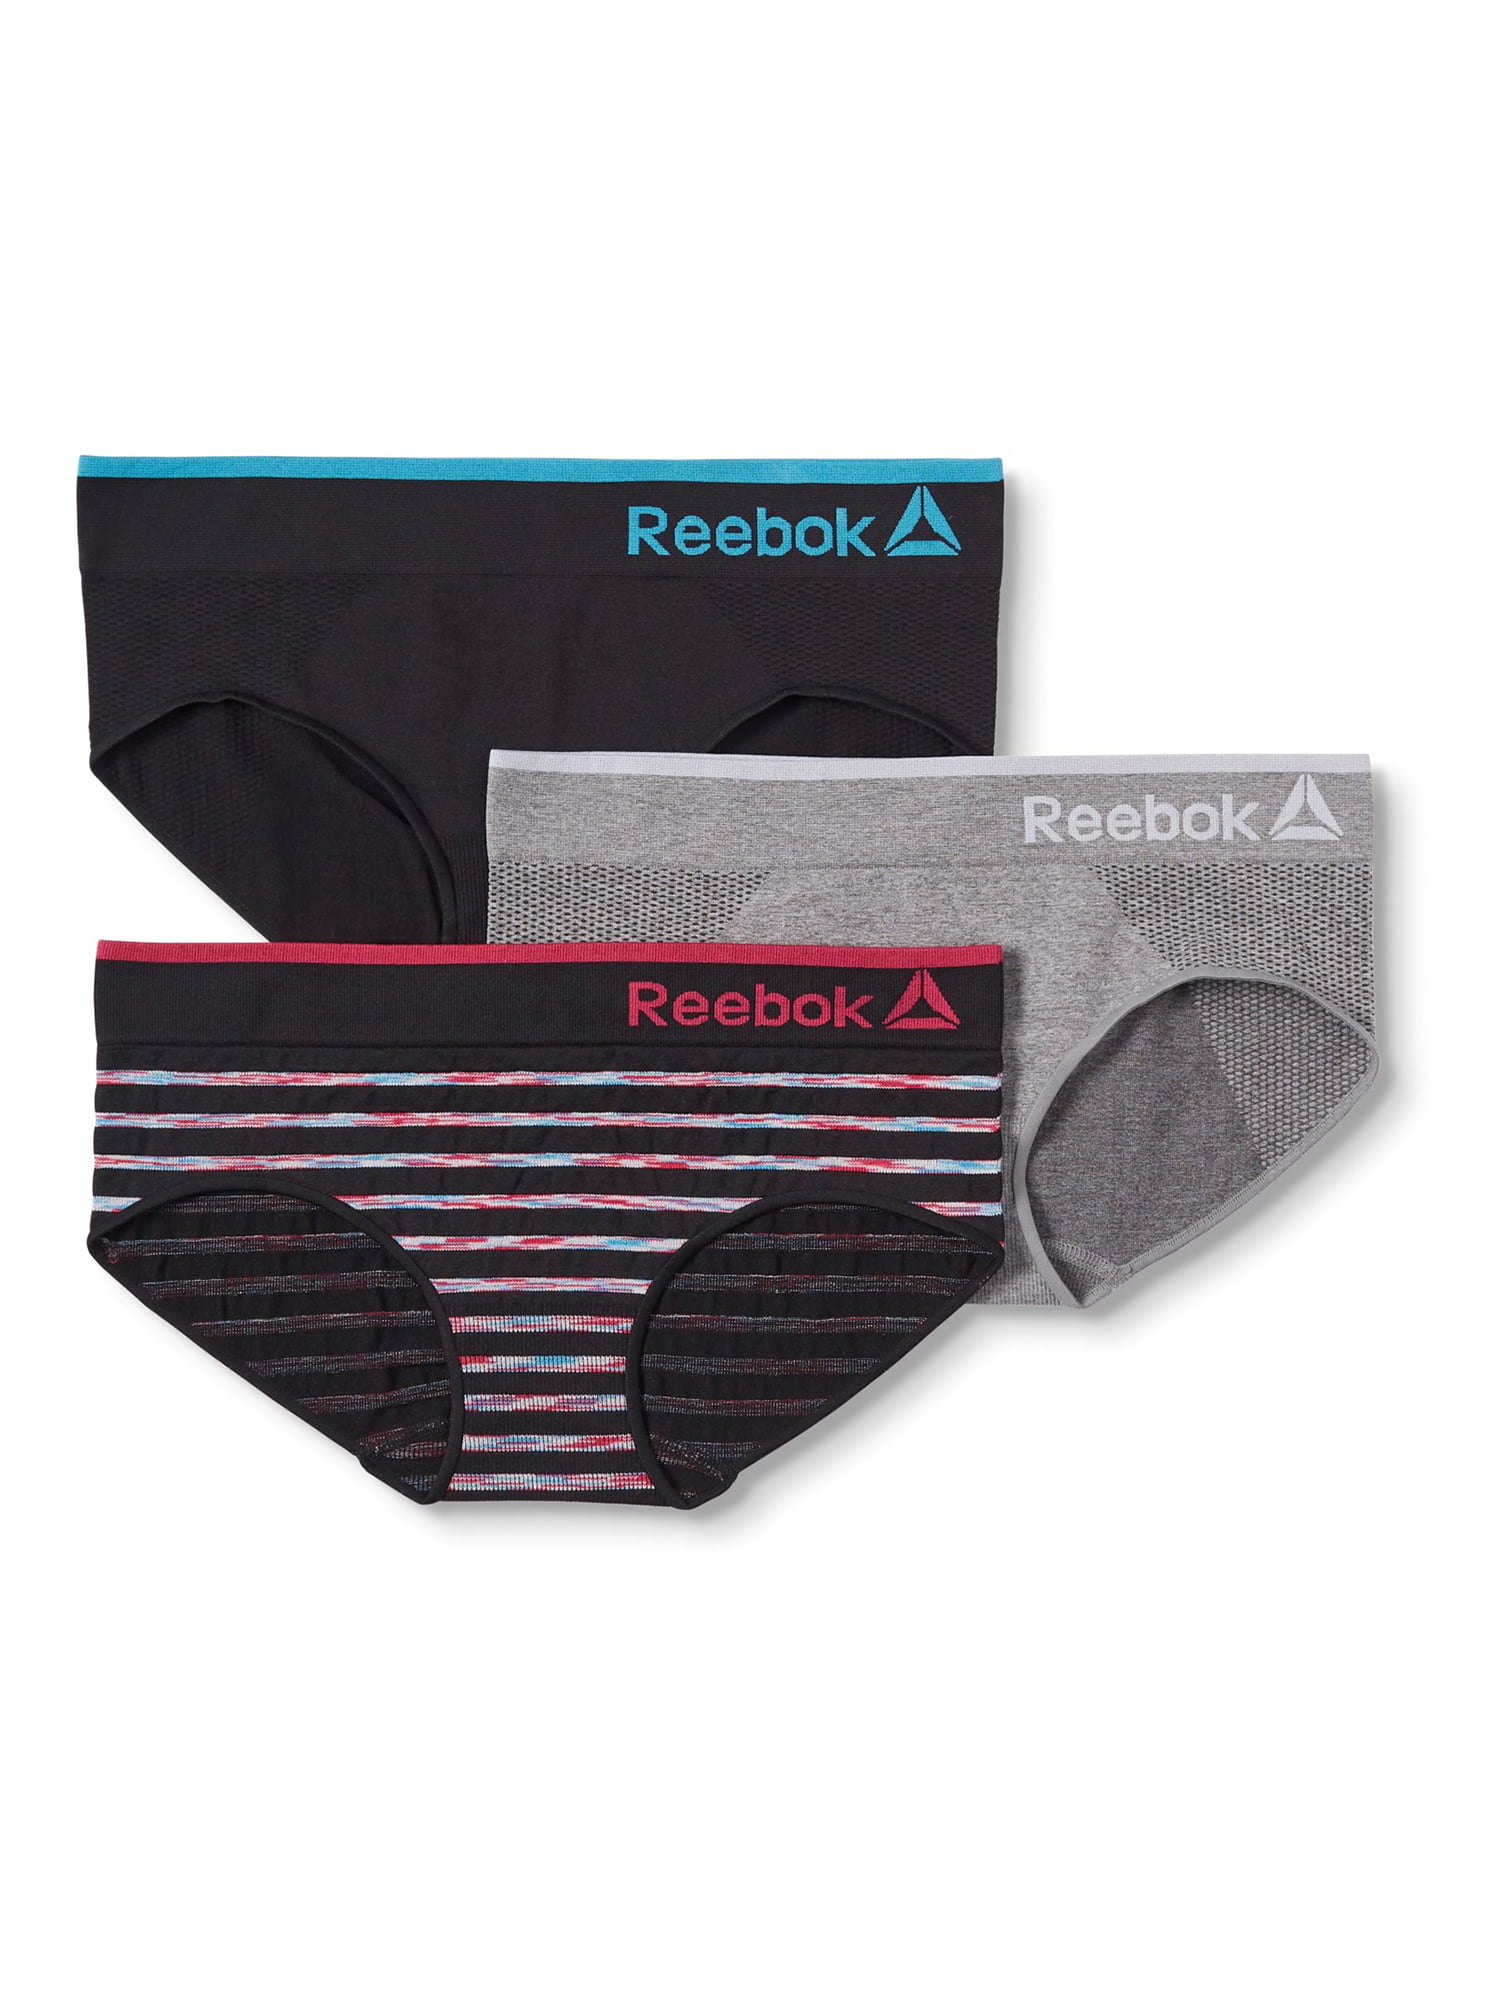 3 Pack Reebok Womens Seamless Hipster Panties Black Space-dye/Red/Black, Small